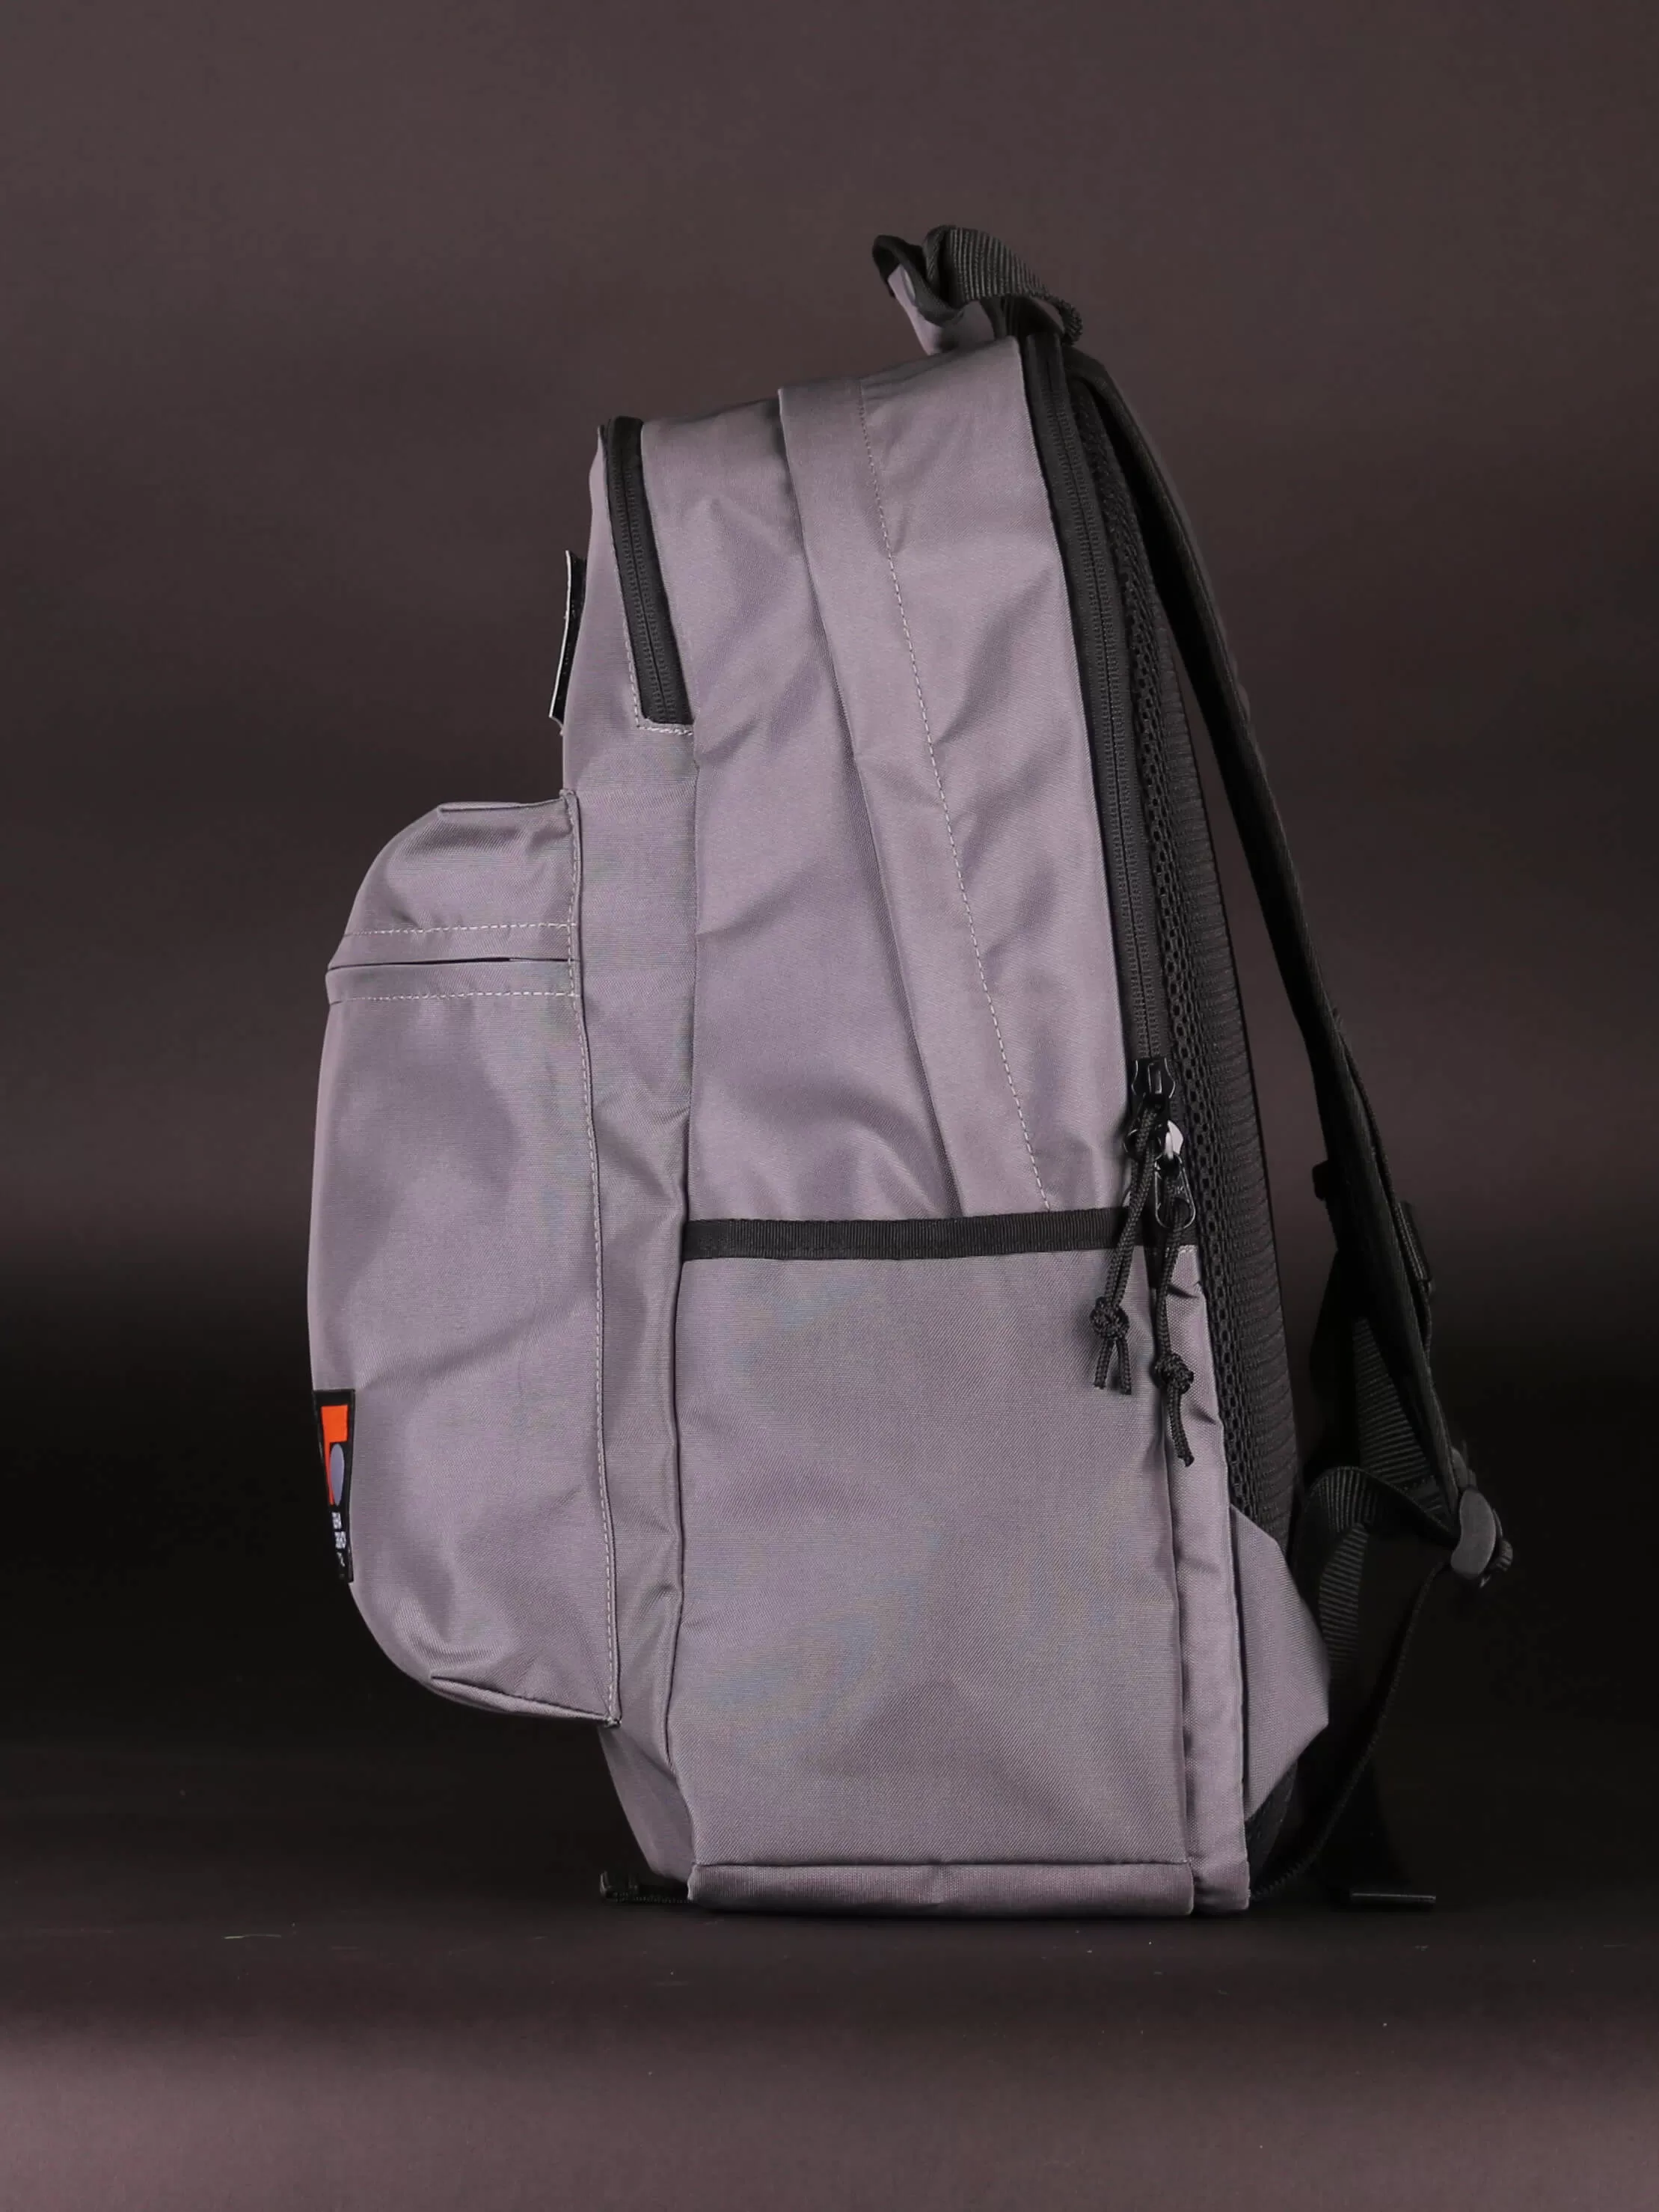 Рюкзак Roverpack серый стальной